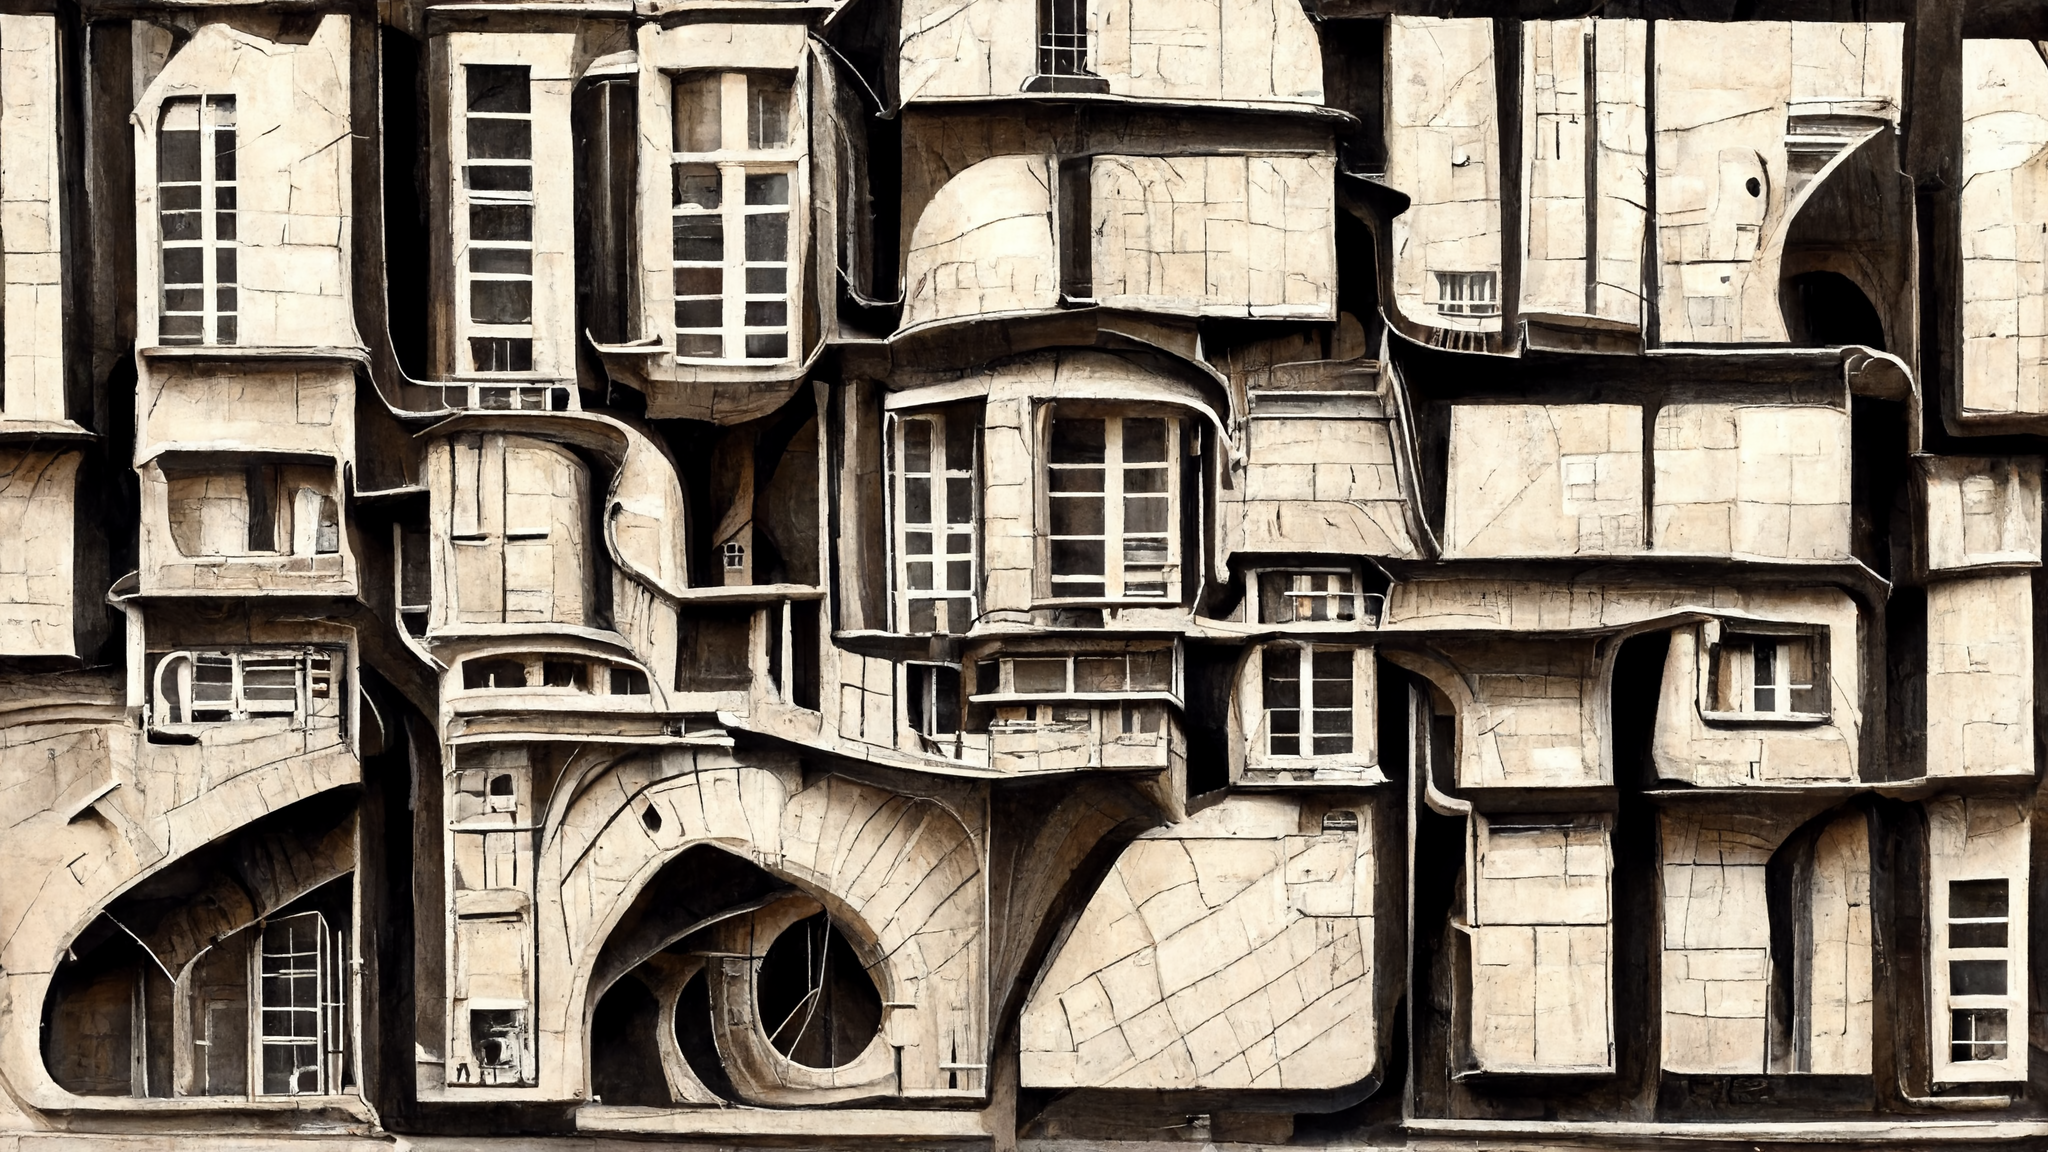 /imagine paris in escher style, very detailed, 8k, --wallpaper